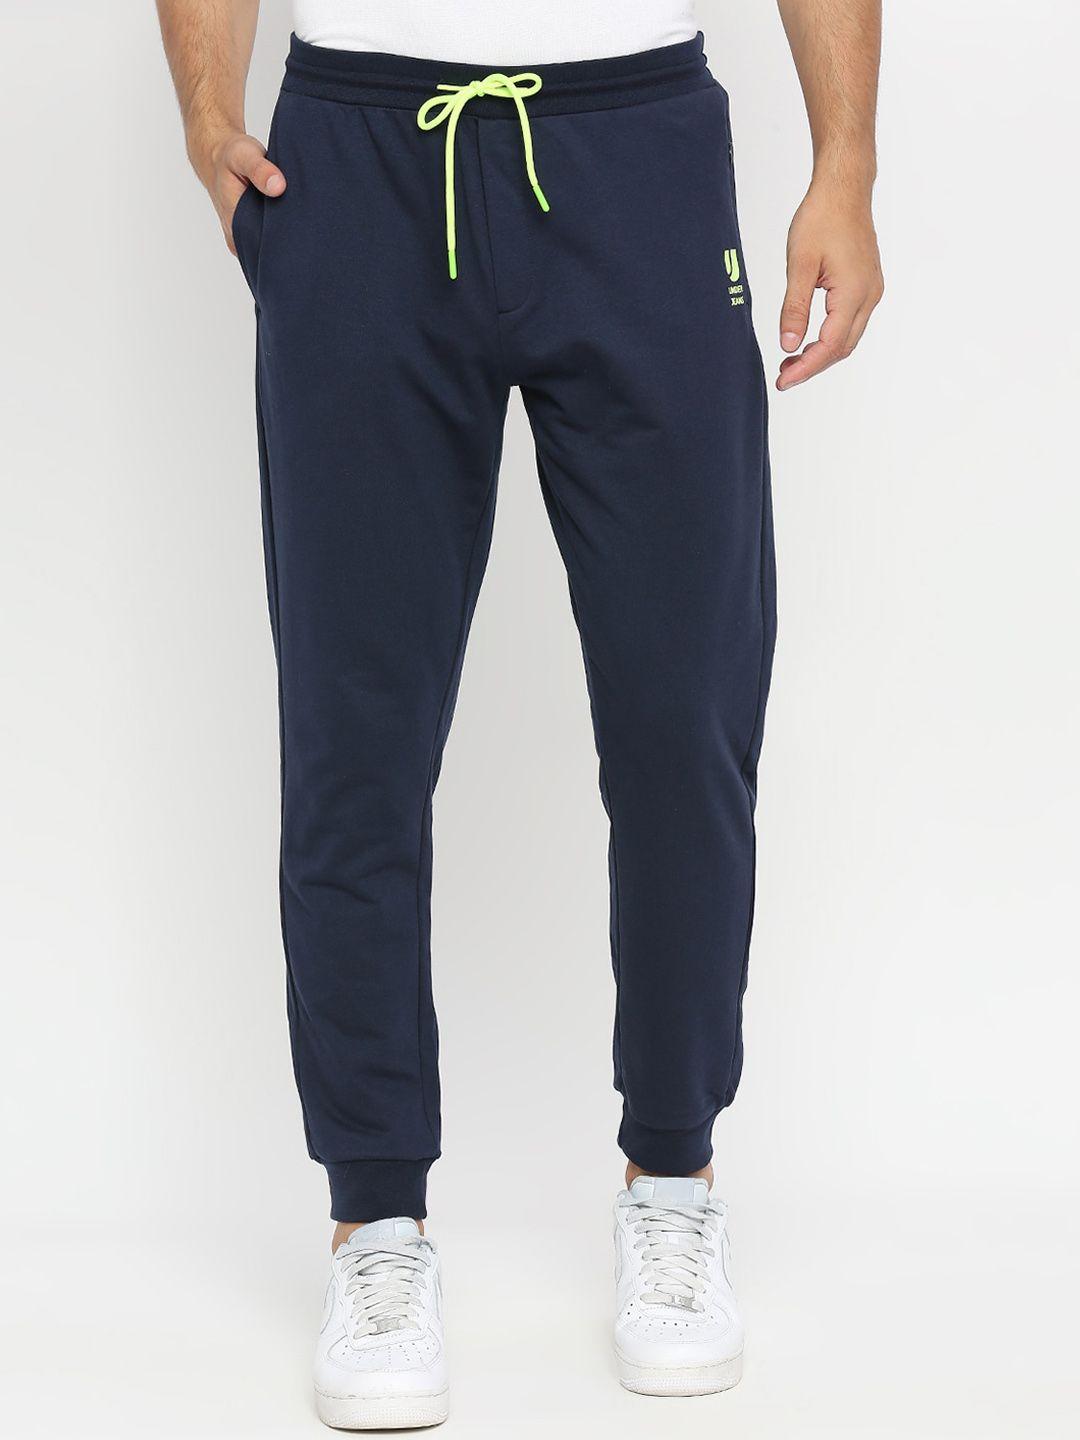 underjeans by spykar cotton joggers track pants